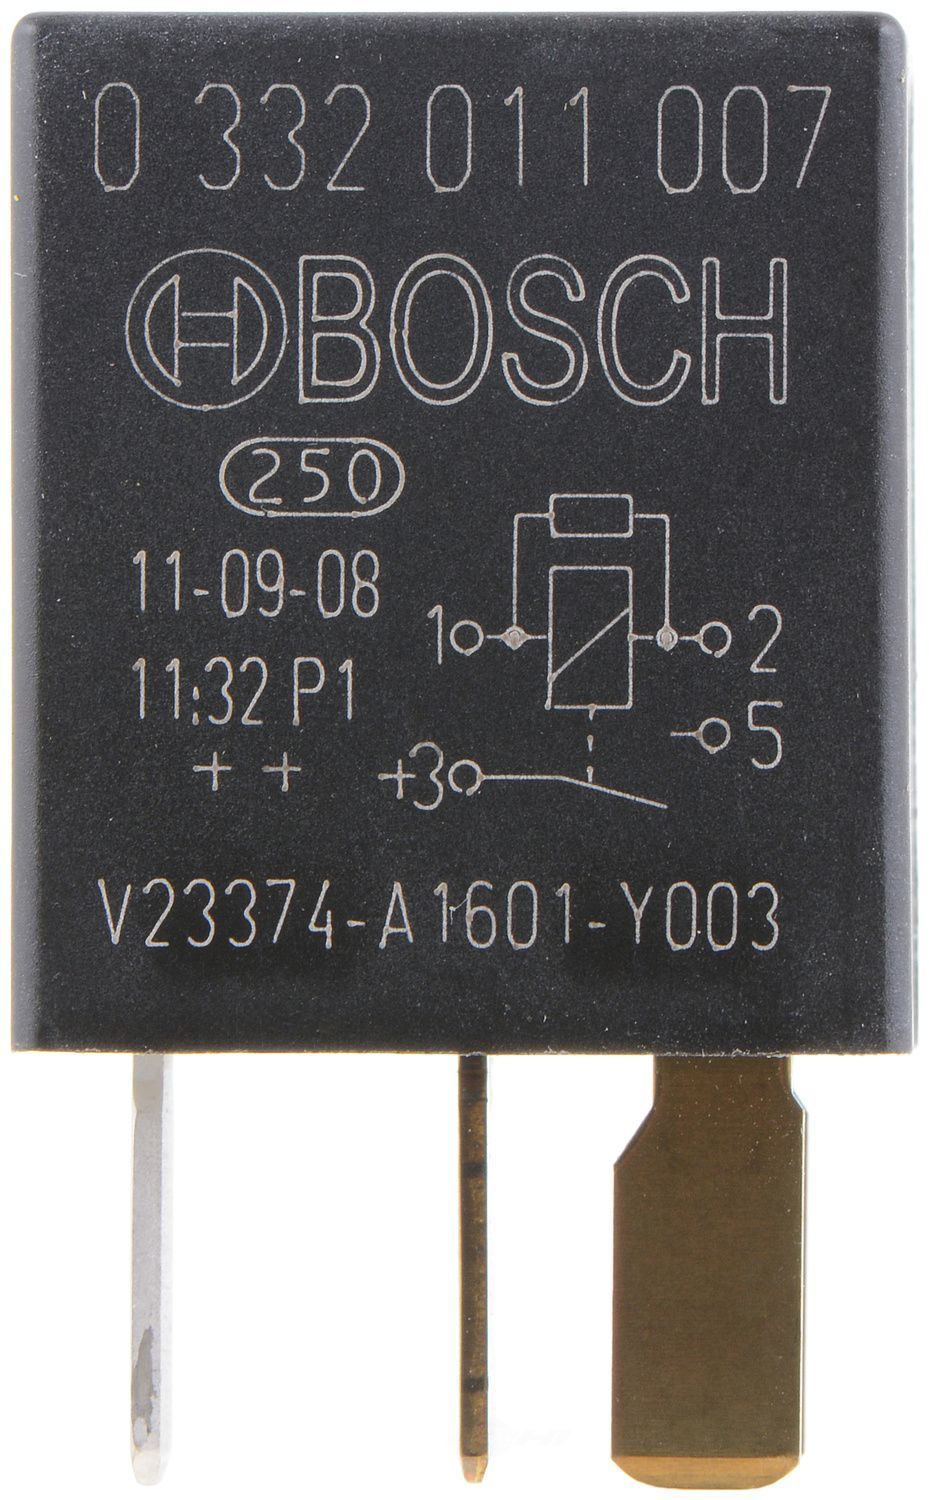 BOSCH - HVAC Motor Relay - BOS 0332011007